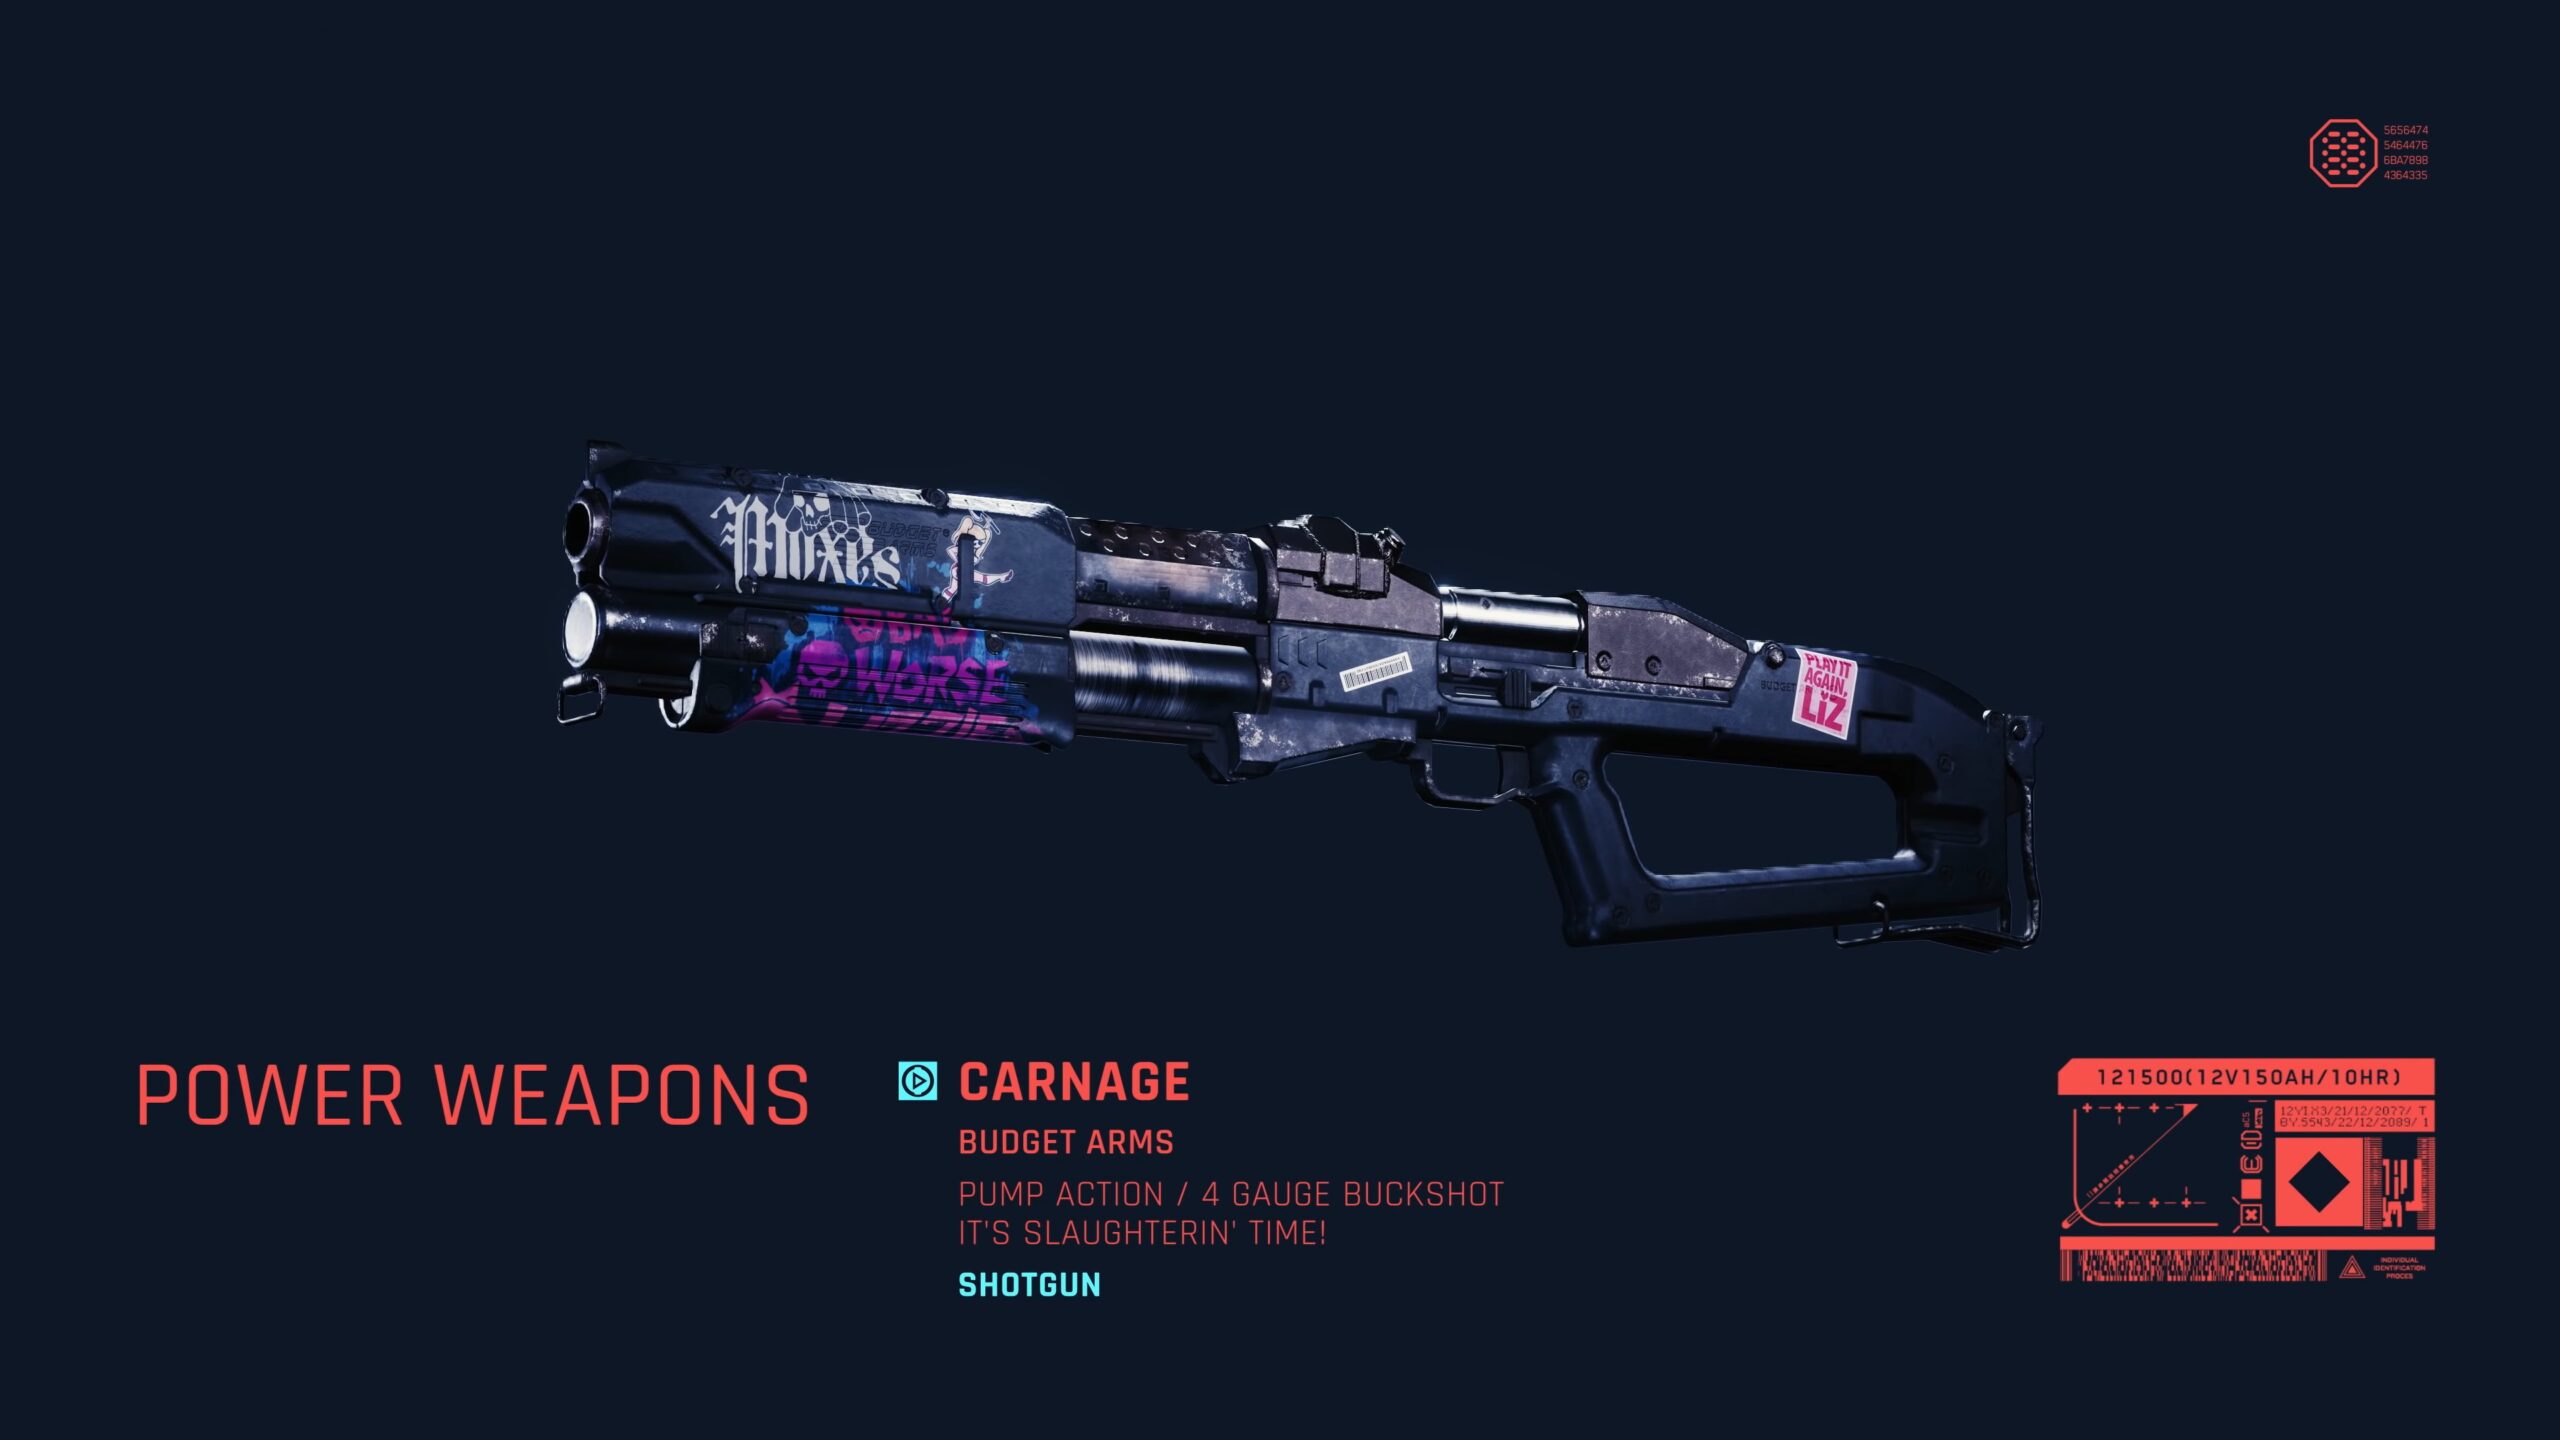 Cyberpunk 2077 Ranged Weapons Budget Arms Carnage Shotgun